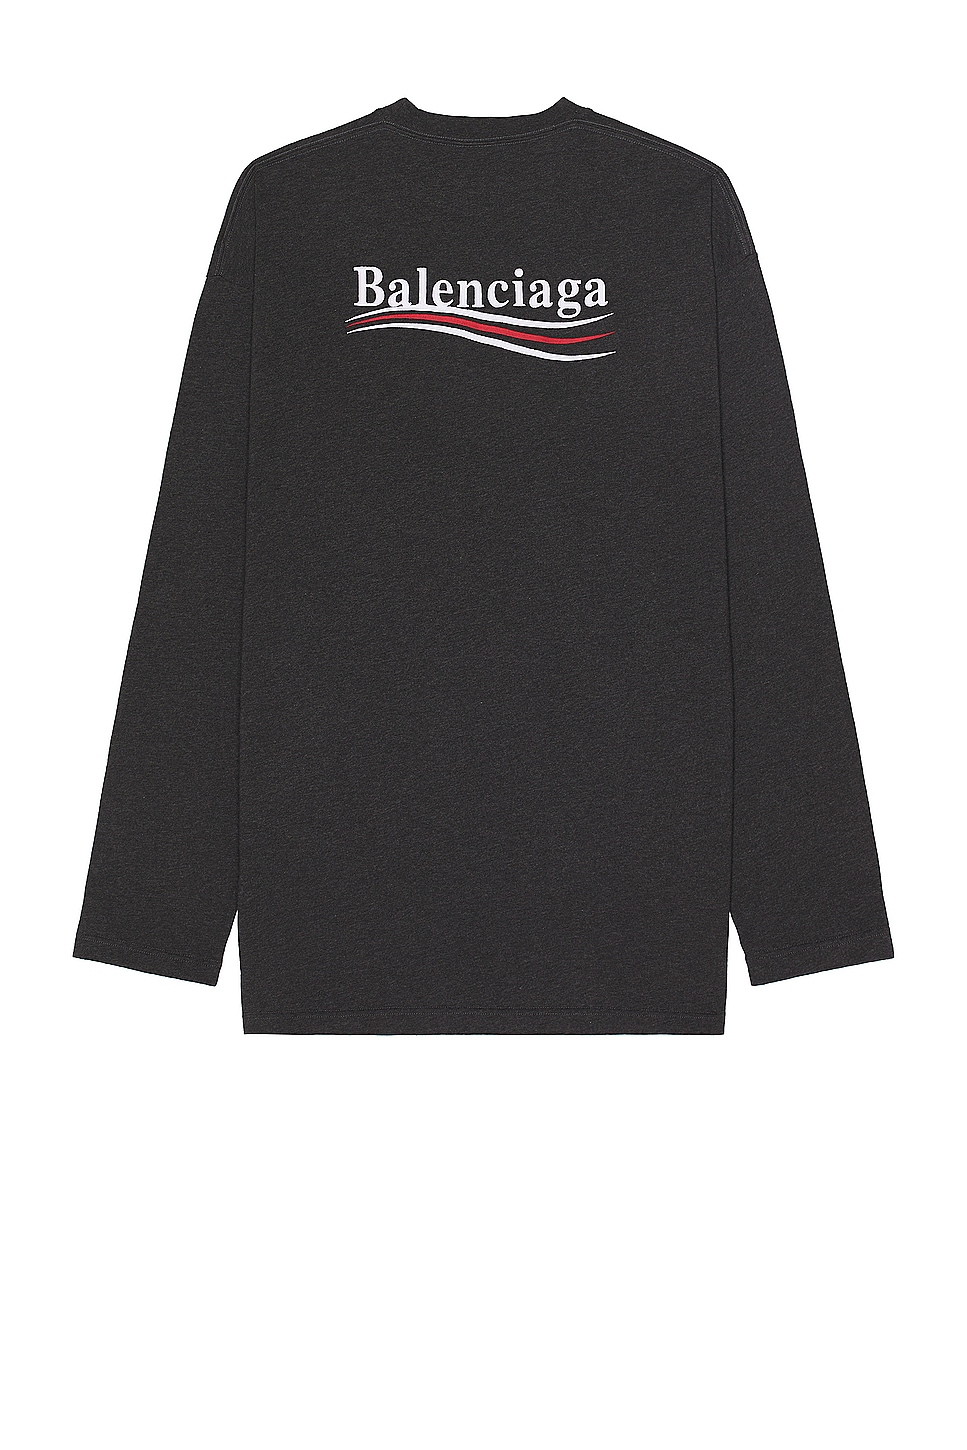 Image 1 of Balenciaga Logo T-shirt in Dark Heather Grey & White